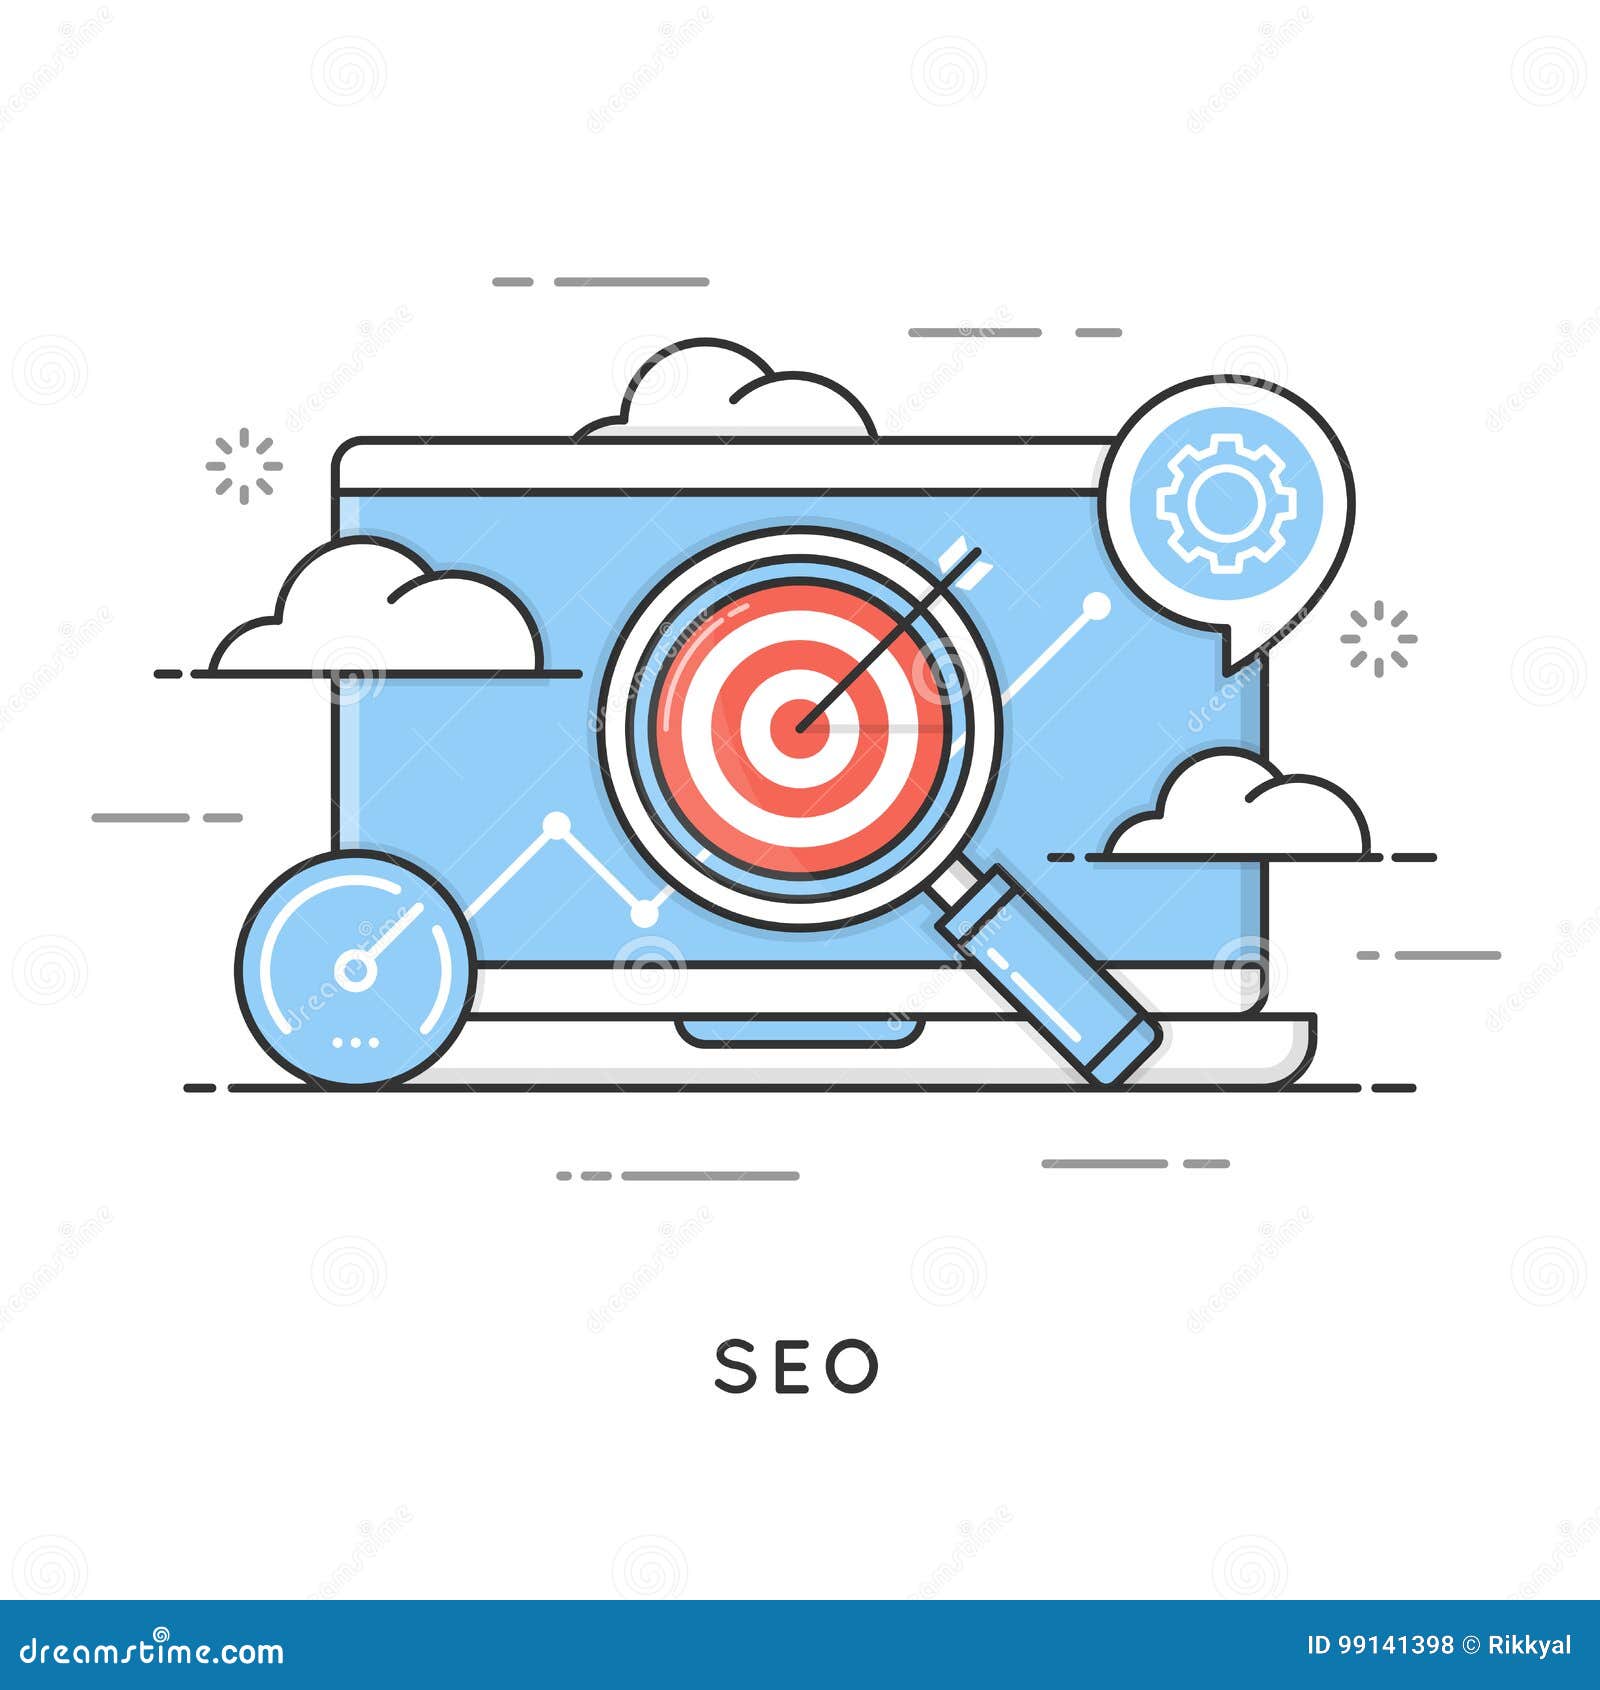 seo, search engine optimization, content marketing, web analytics.